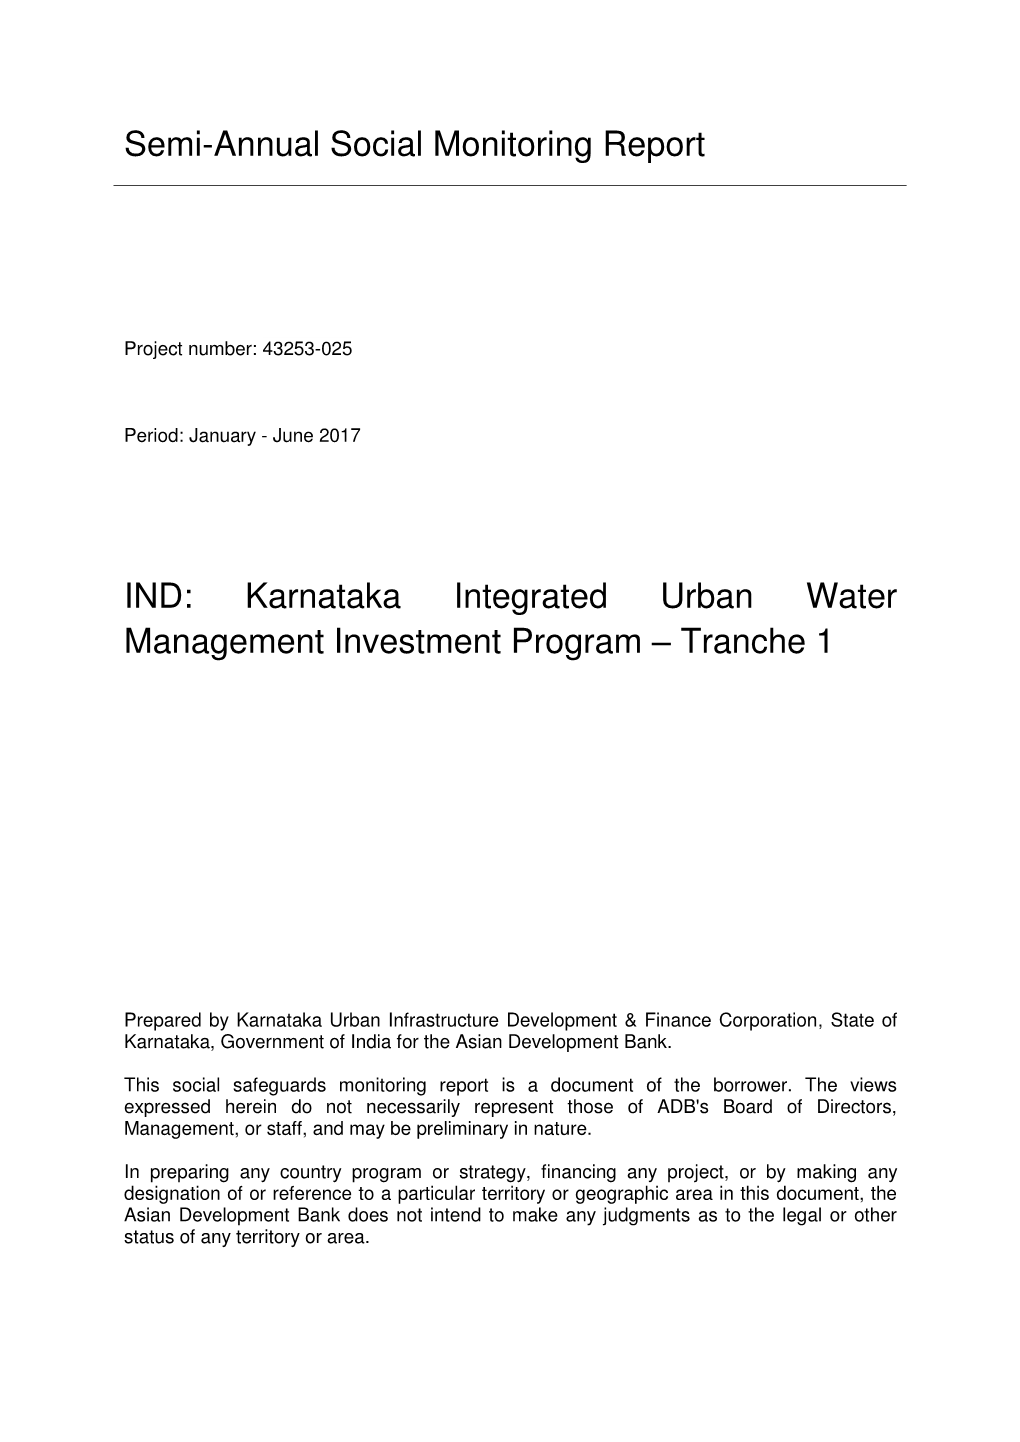 Karnataka Integrated Urban Water Management Investment Program – Tranche 1